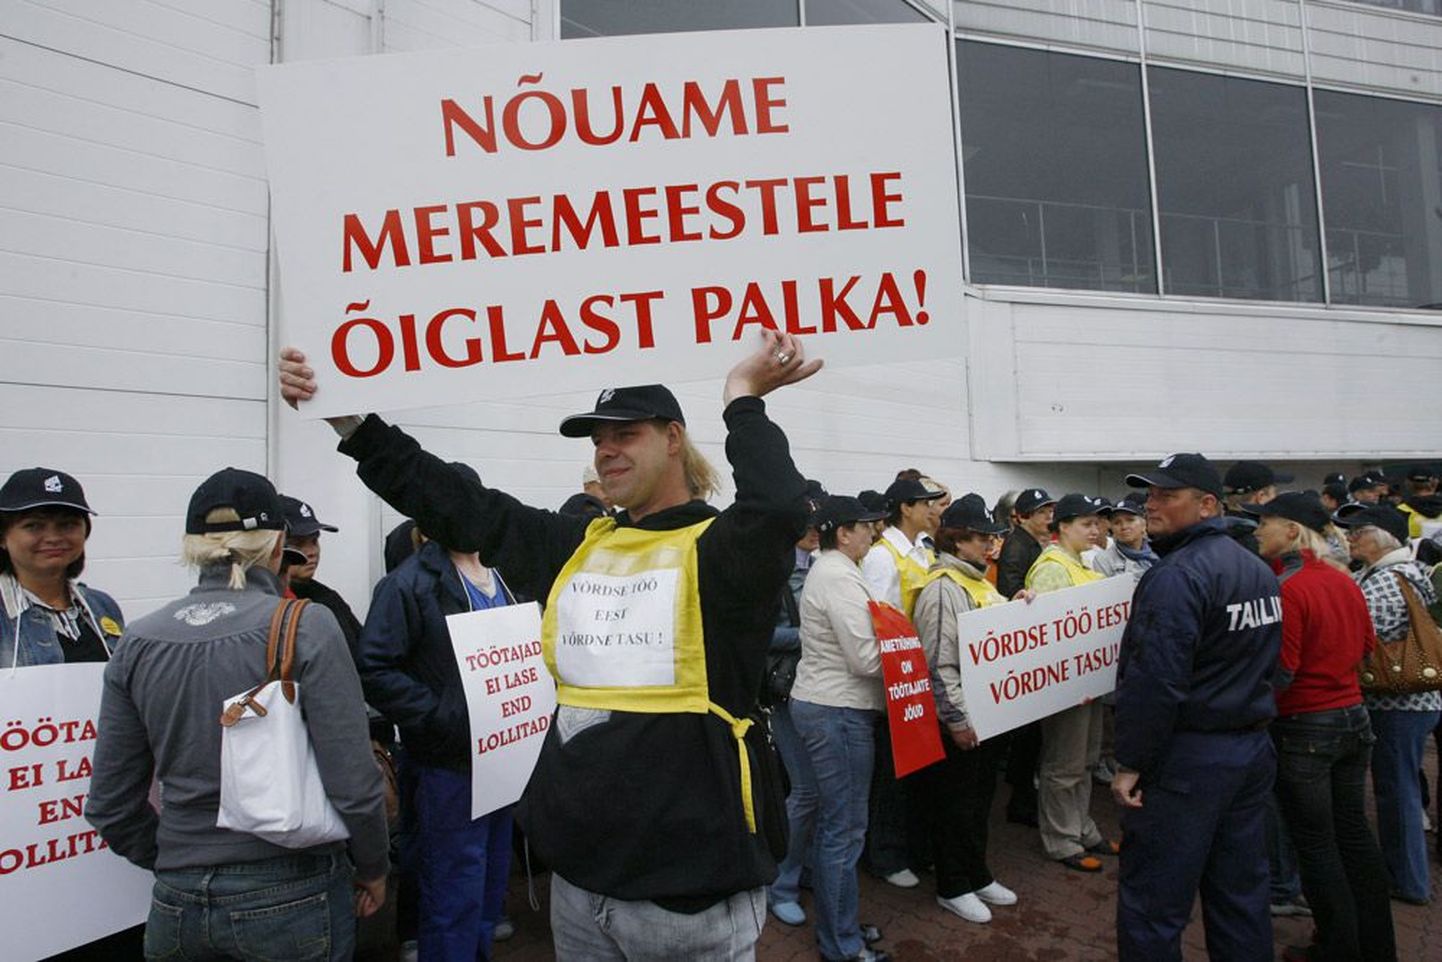 Tallinki töötajate hoiatusstreik.